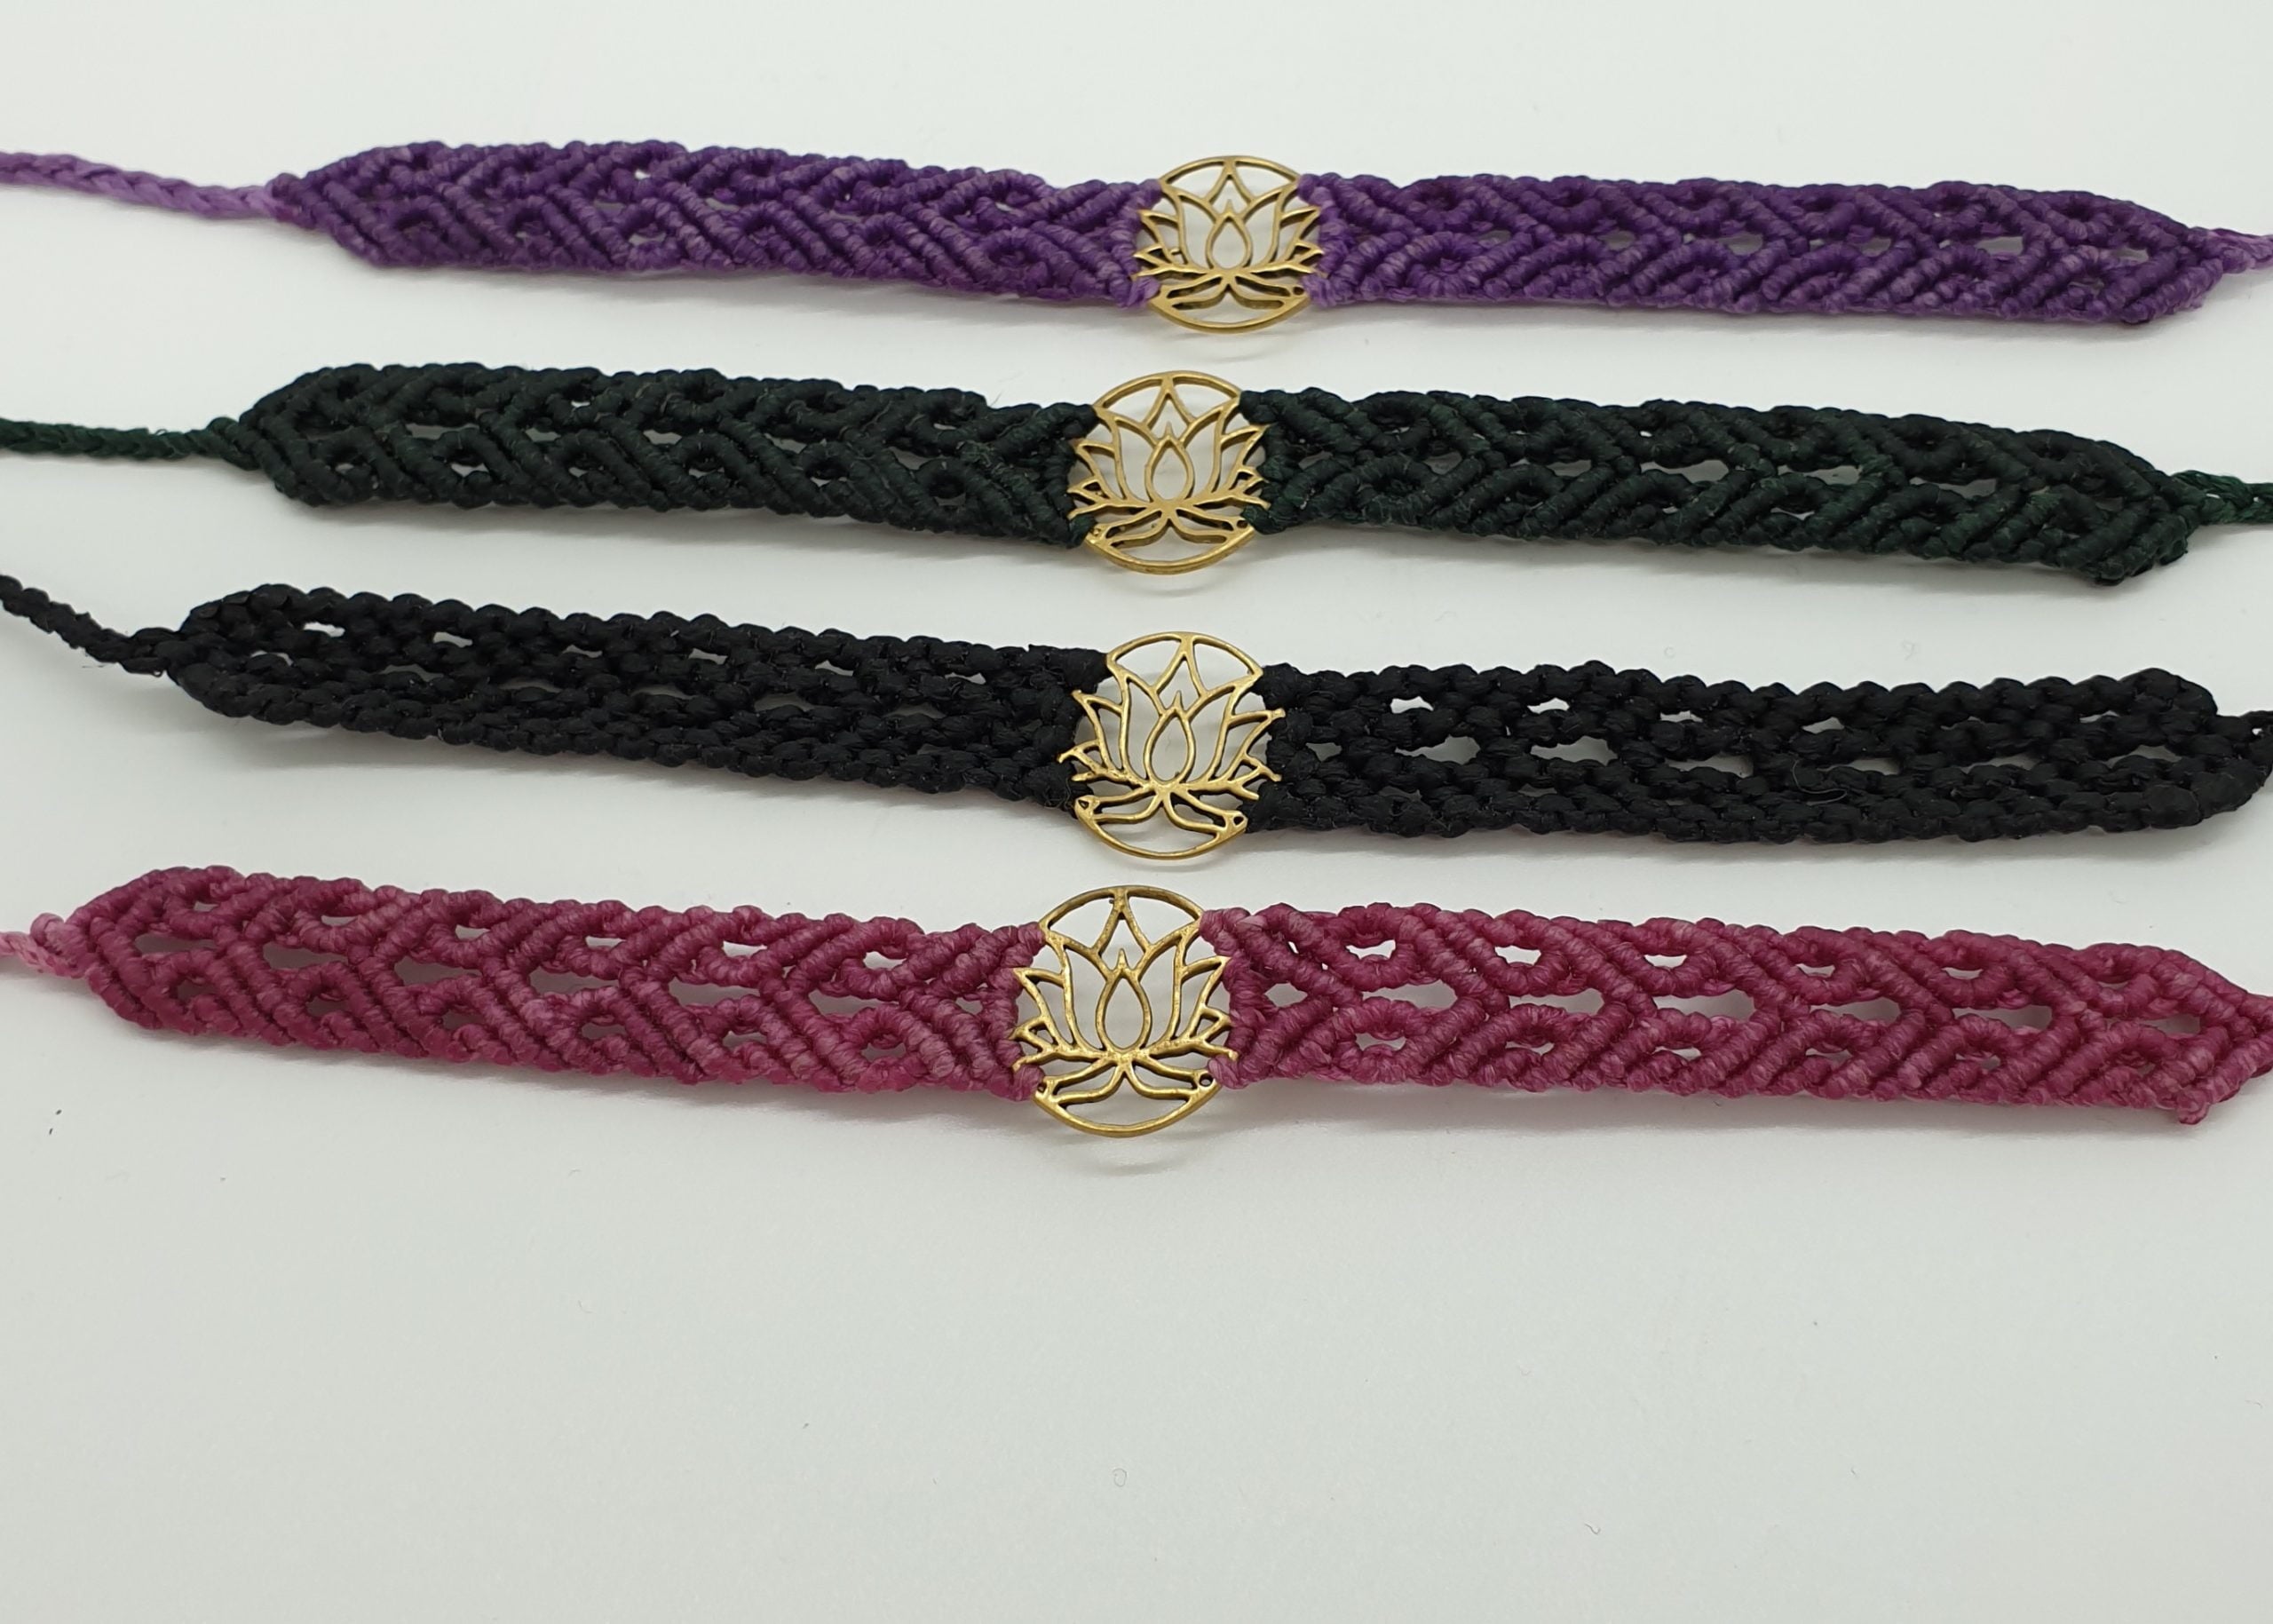 Macrame Lotus Yoga Bracelet Or Anklet - Random Colour